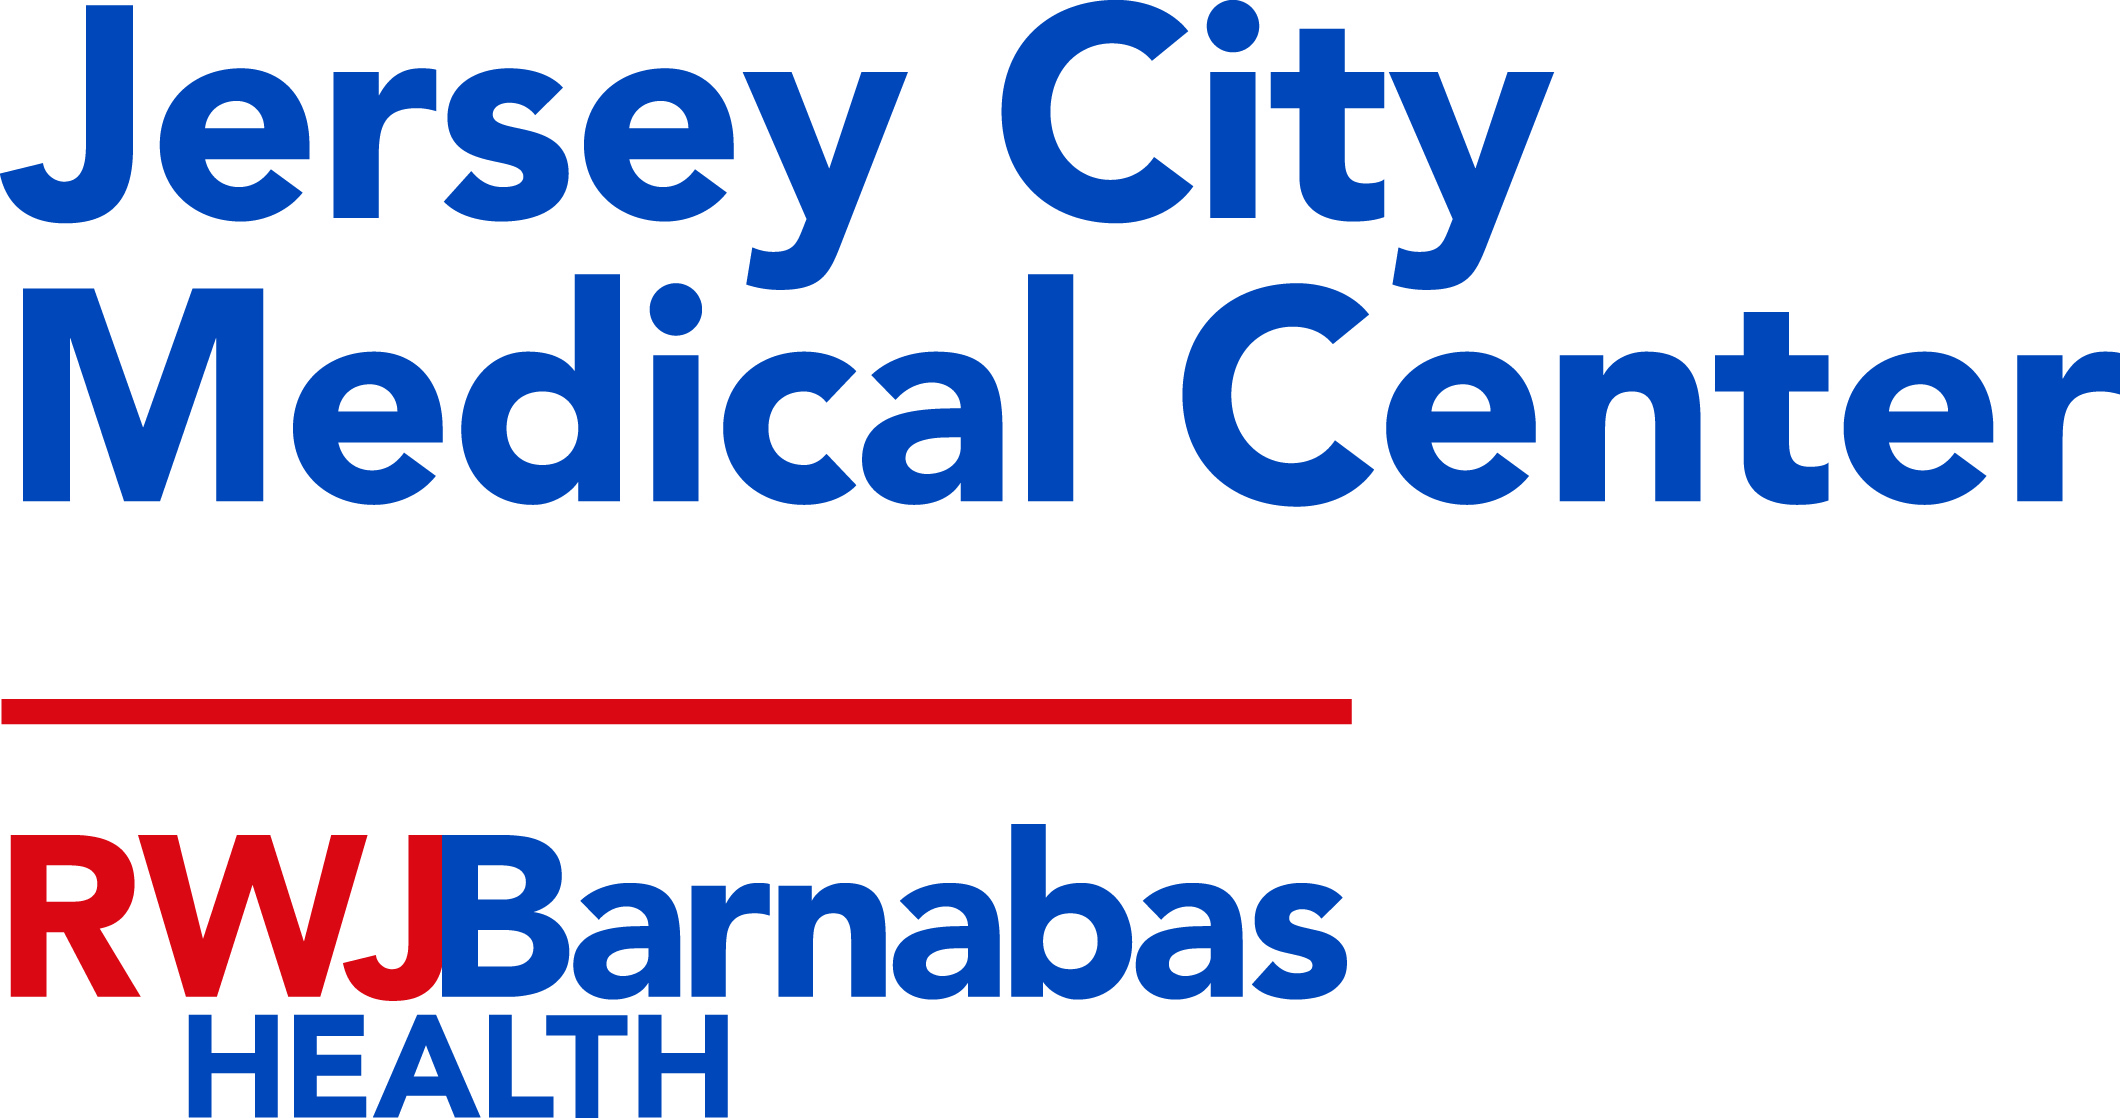 Jersey City Medical Center - Patient Navigation Program